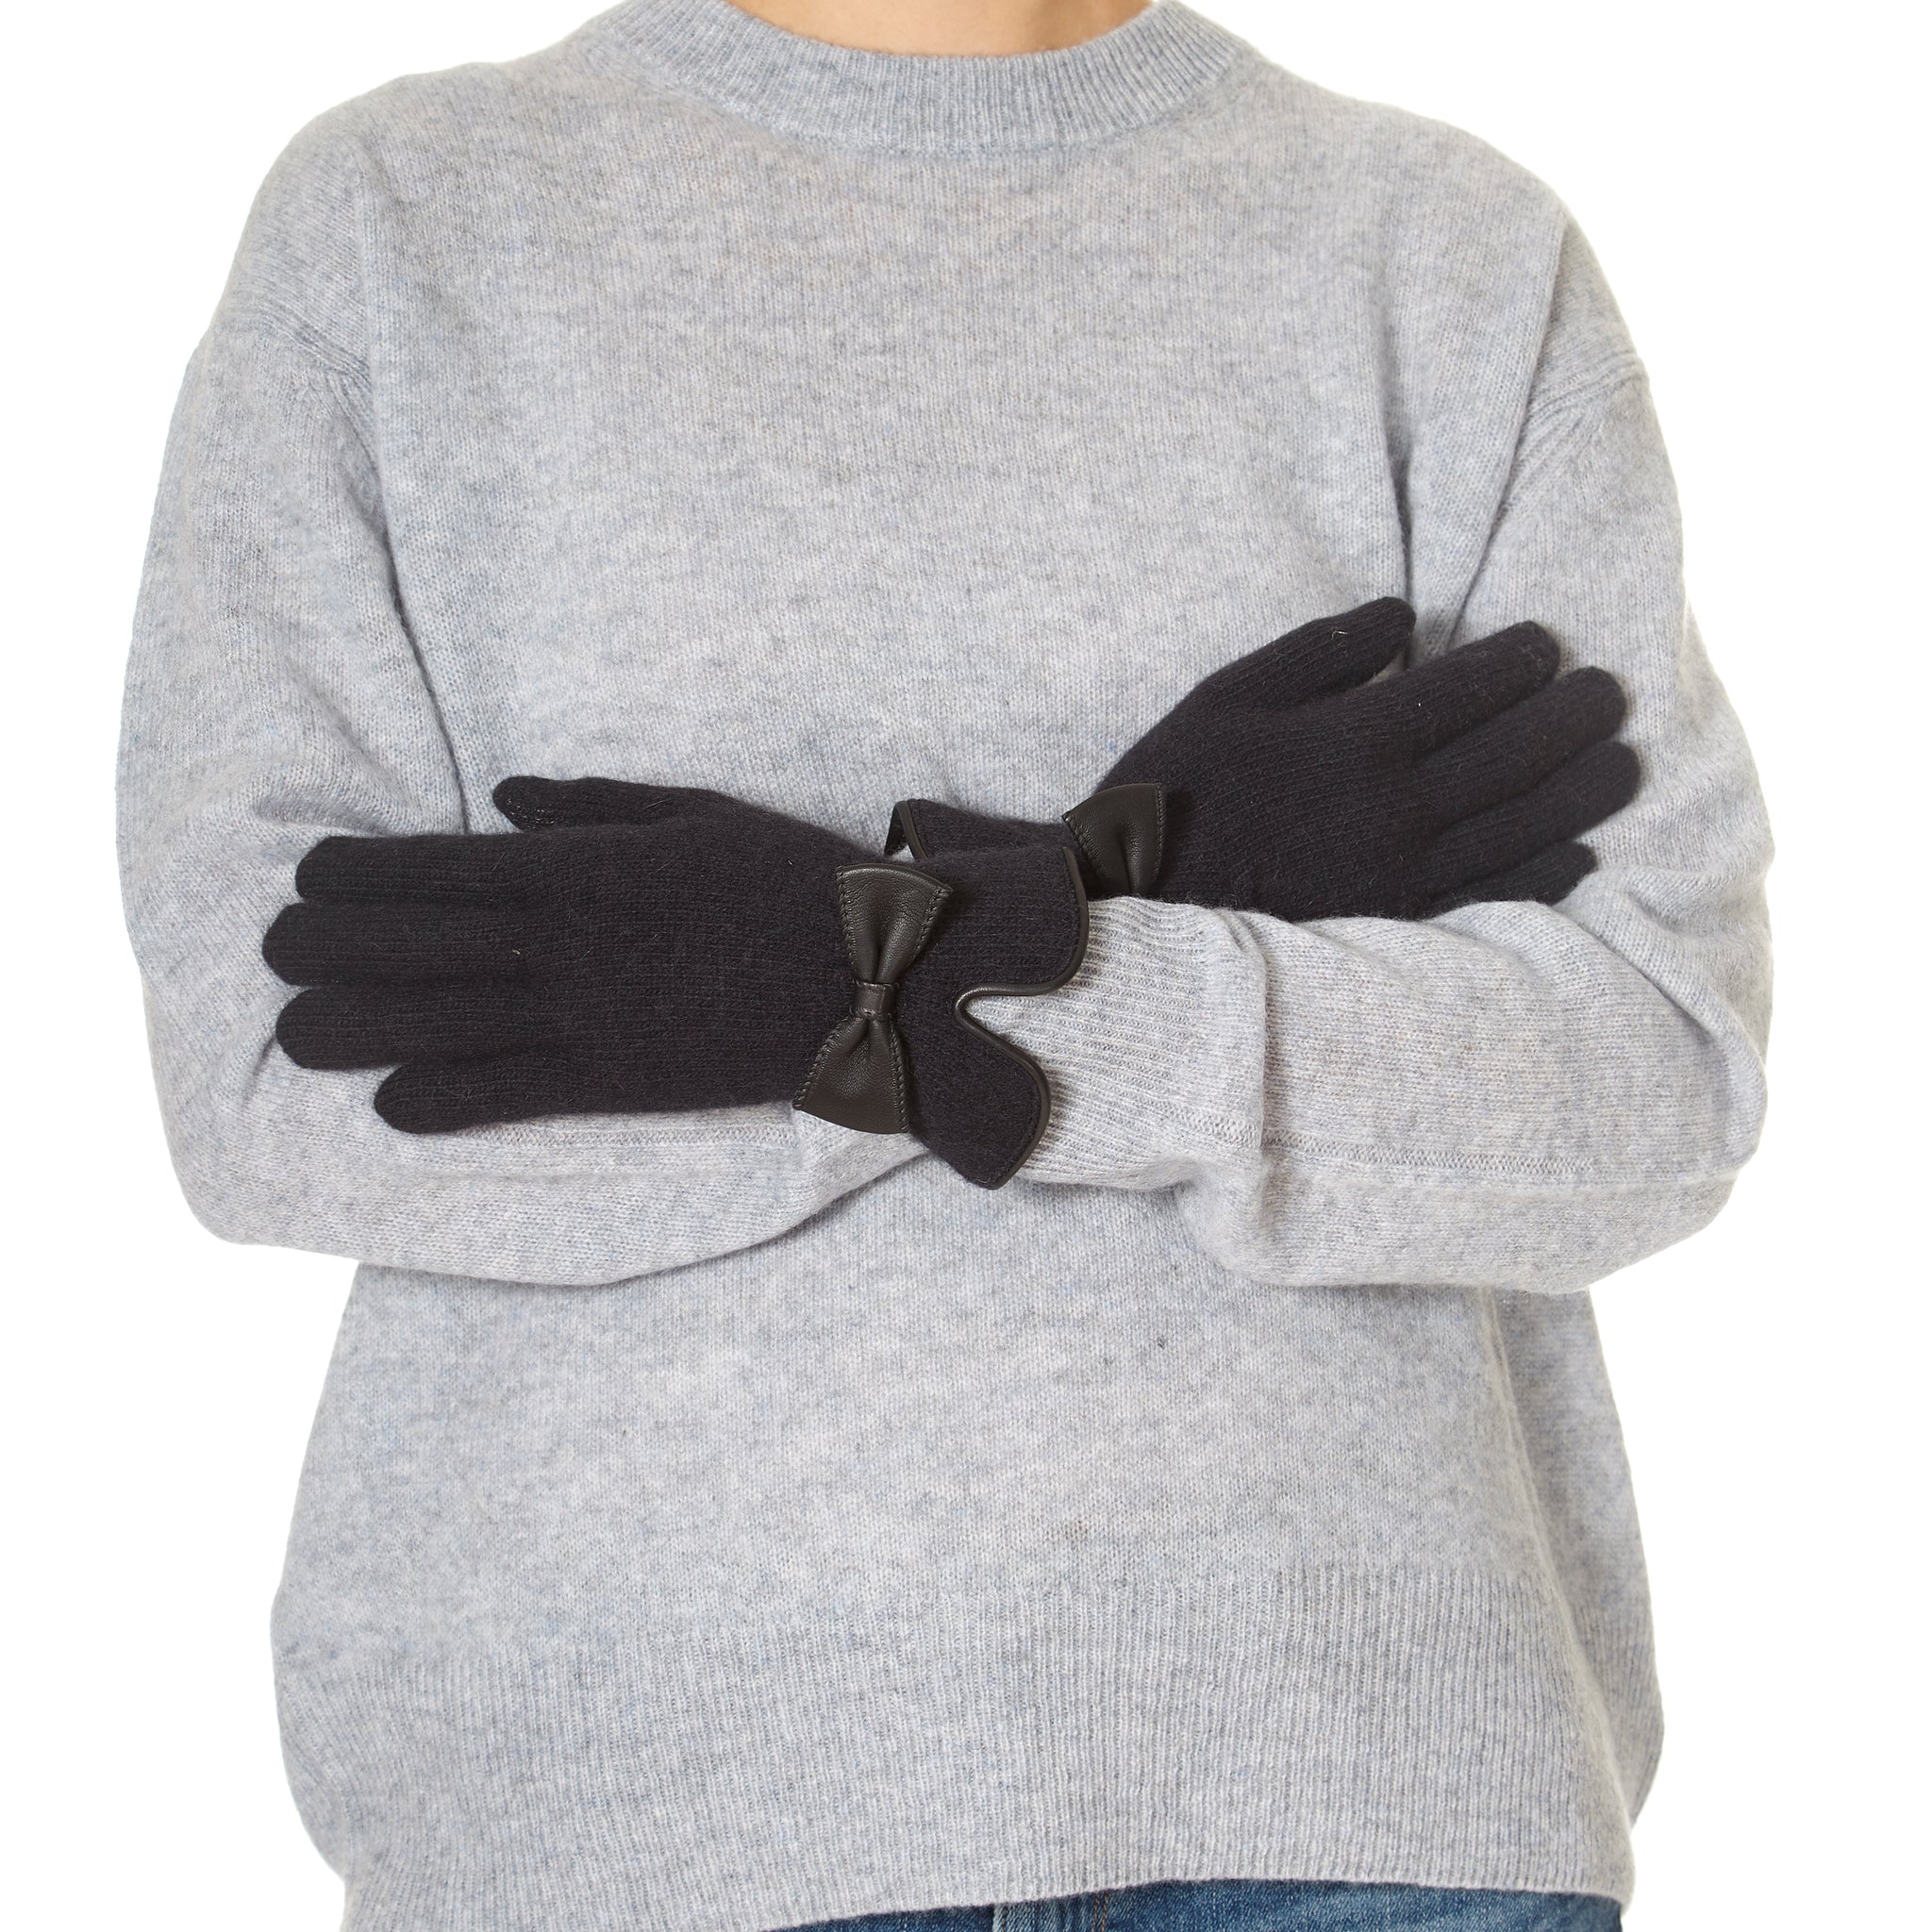 Santacana Black Bow Gloves 'Wool Blend' - Jessimara